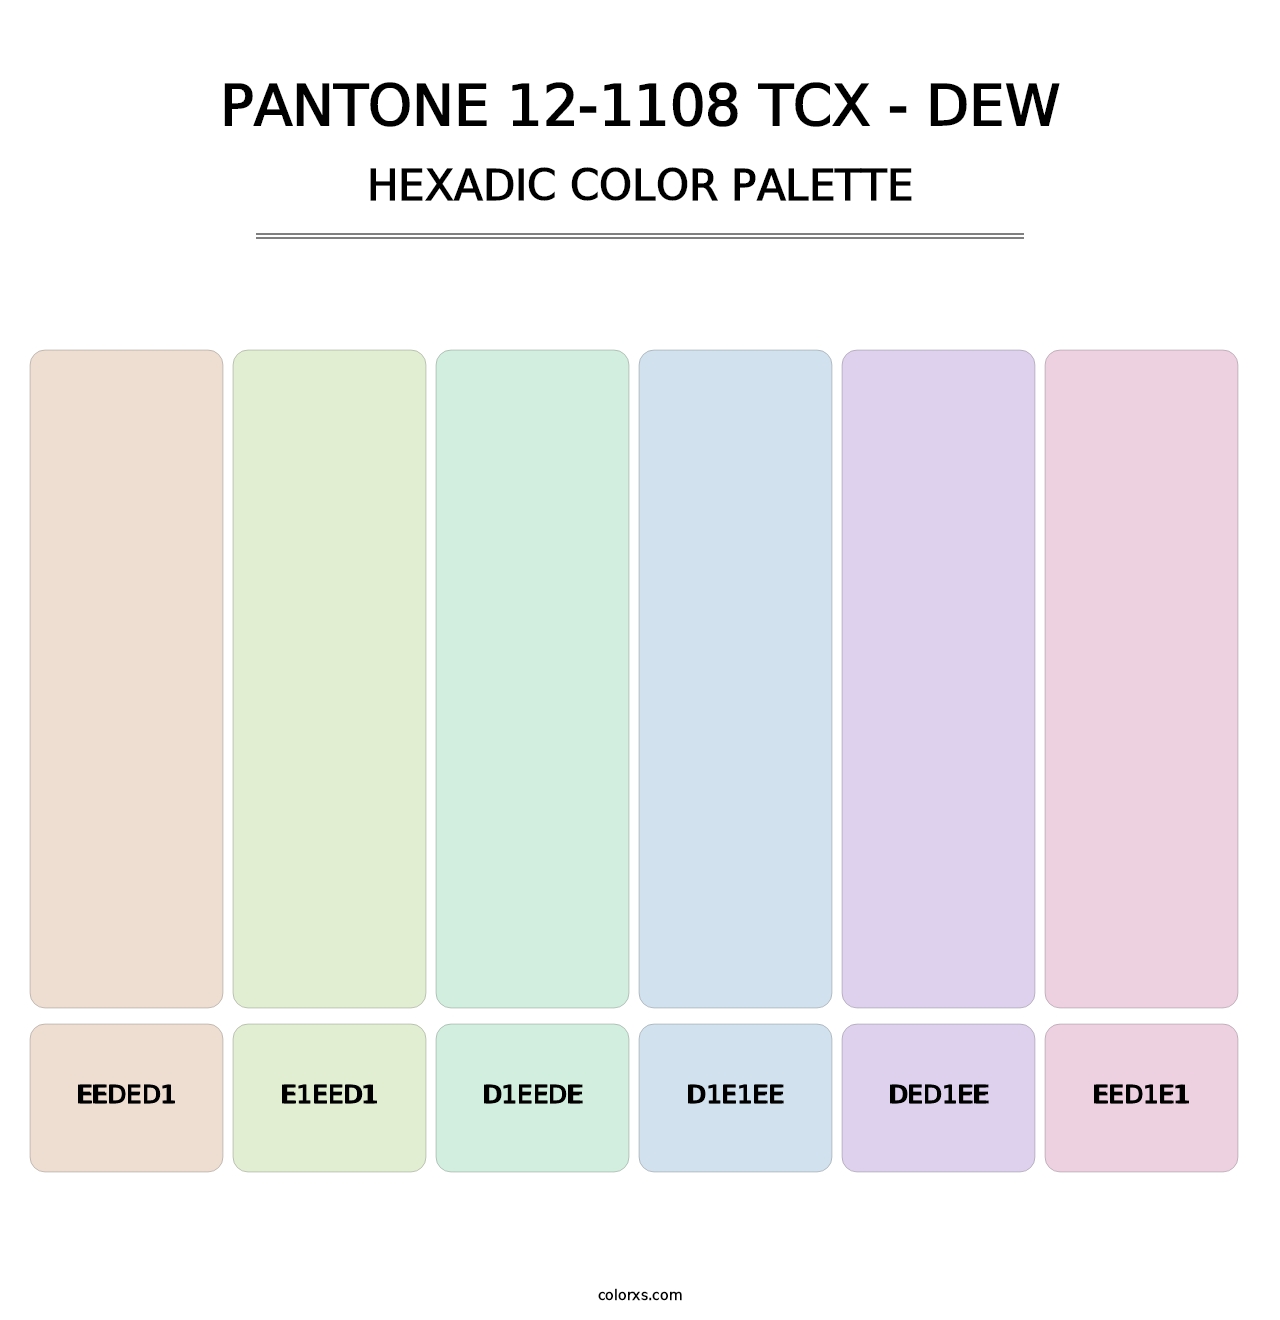 PANTONE 12-1108 TCX - Dew - Hexadic Color Palette